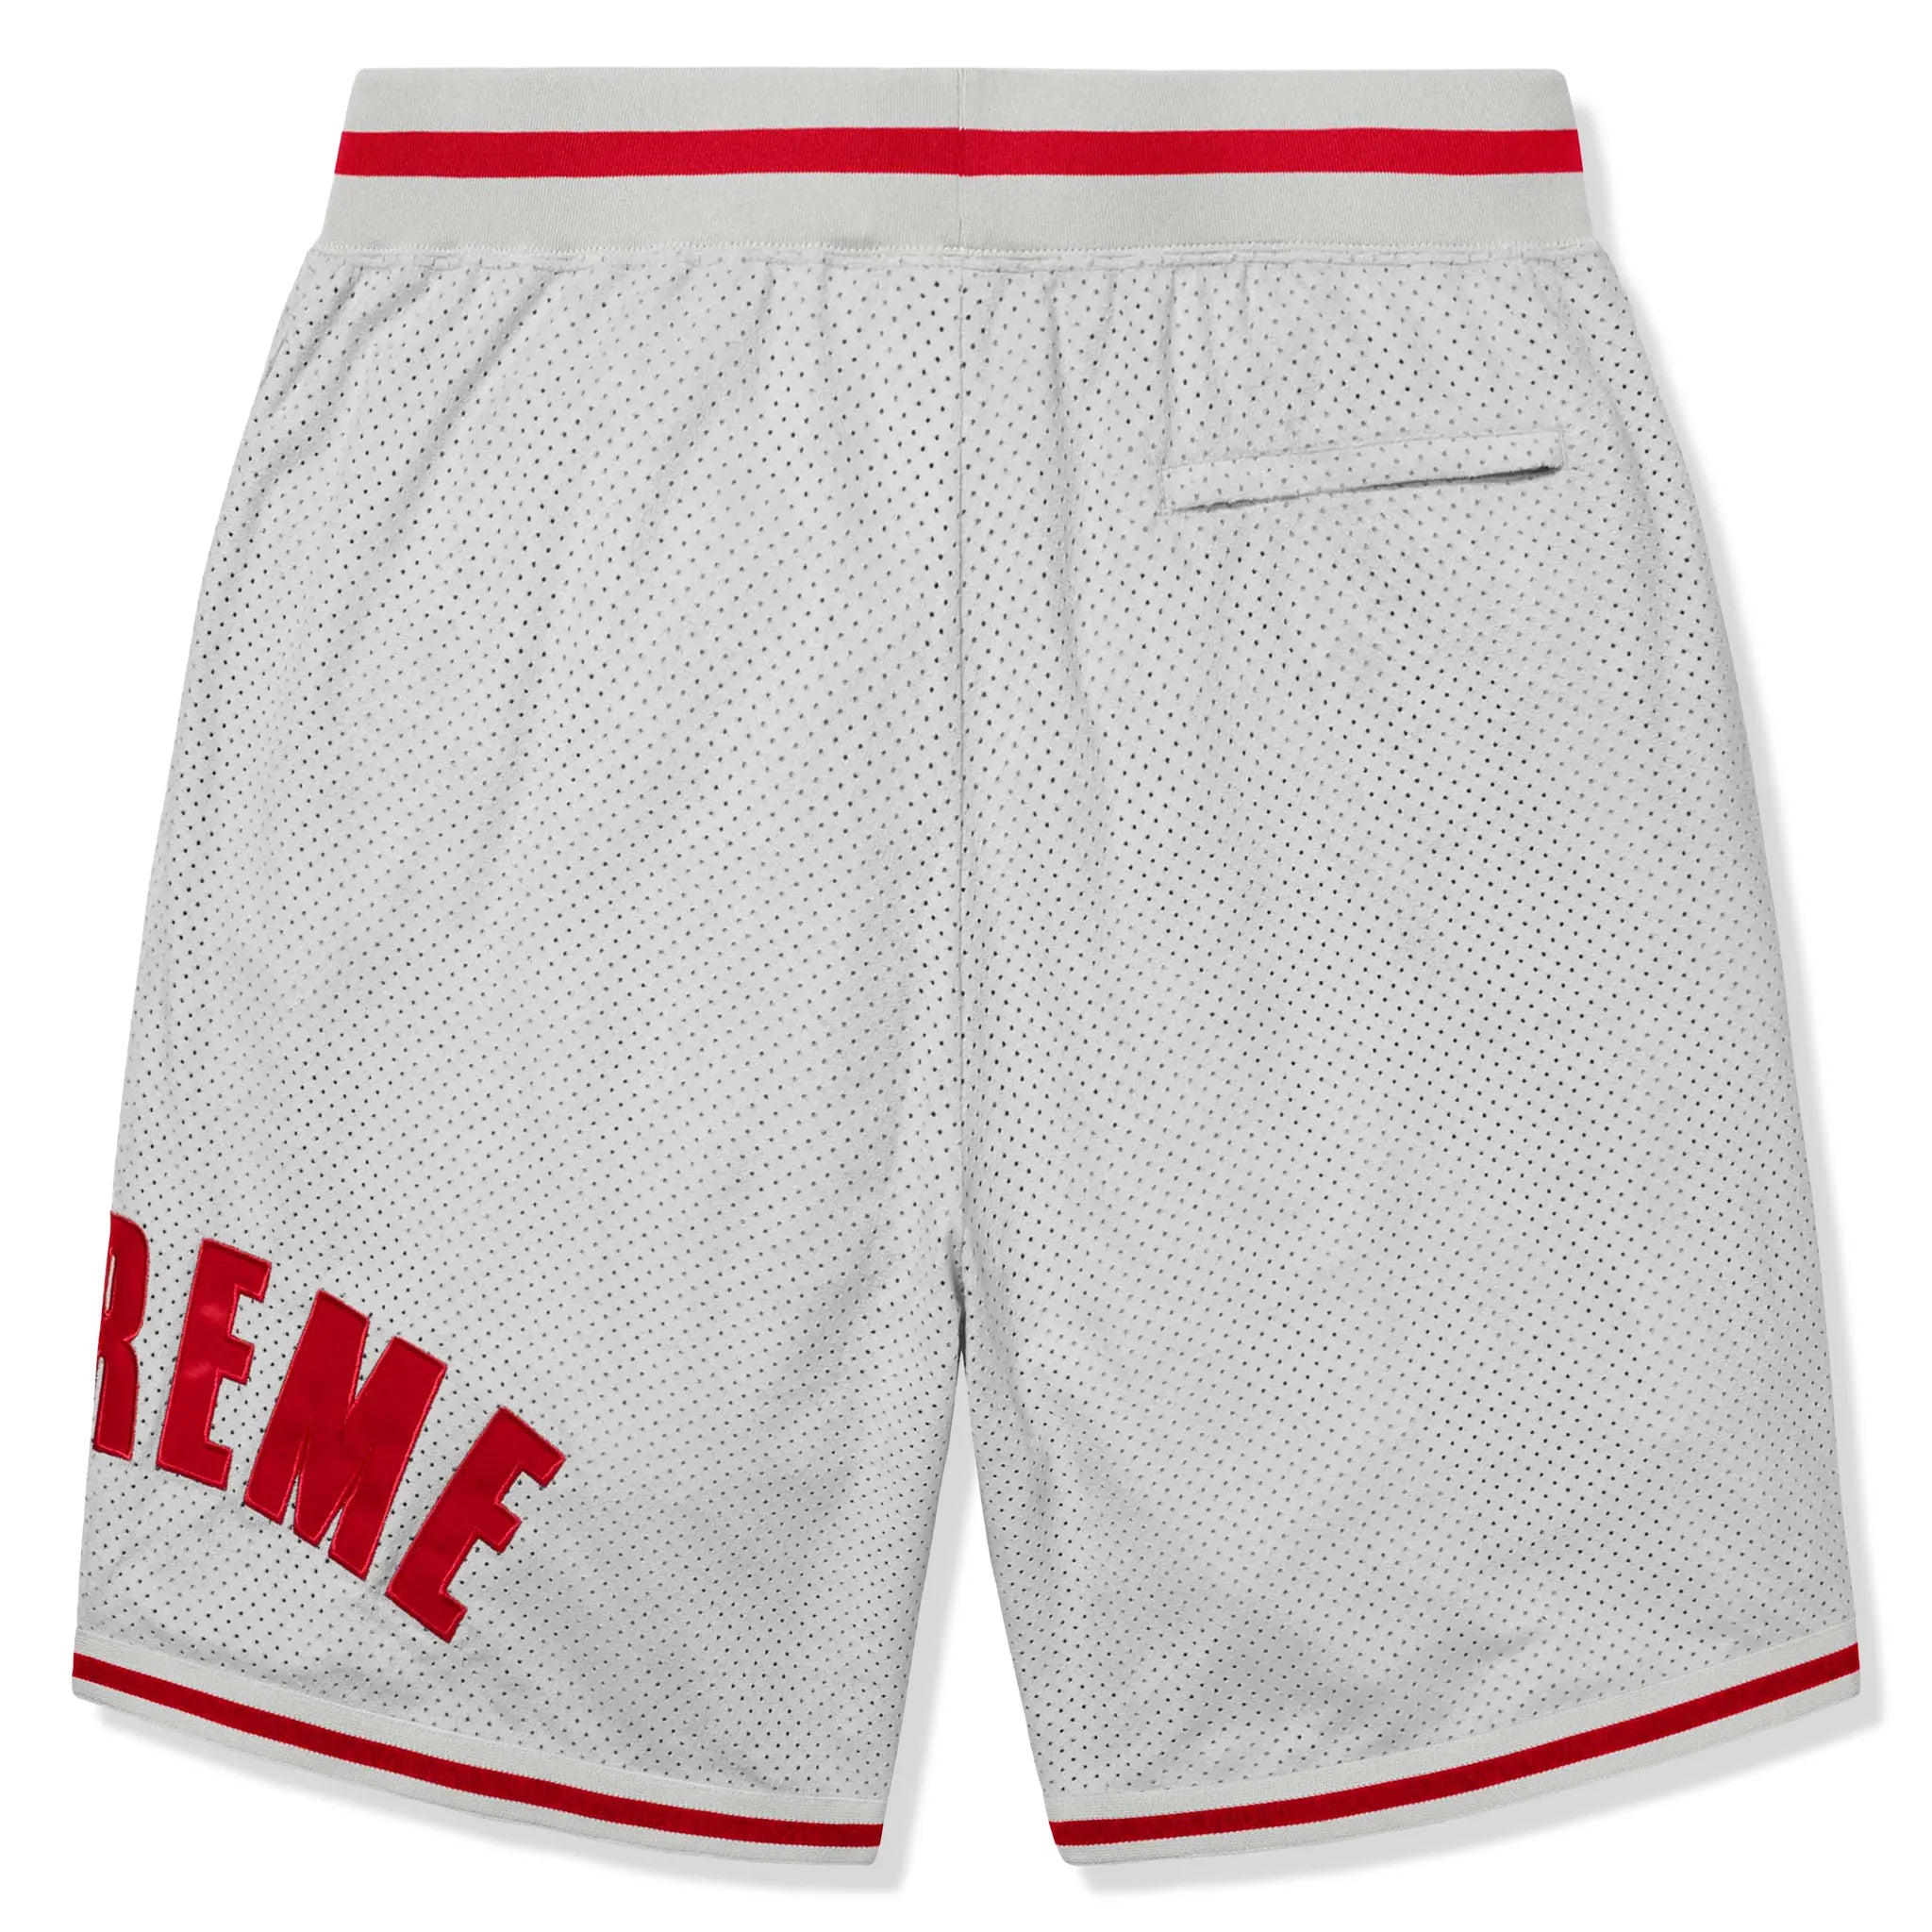 Back view of Supreme Ultrasuede Mesh Baseball Grey Shorts